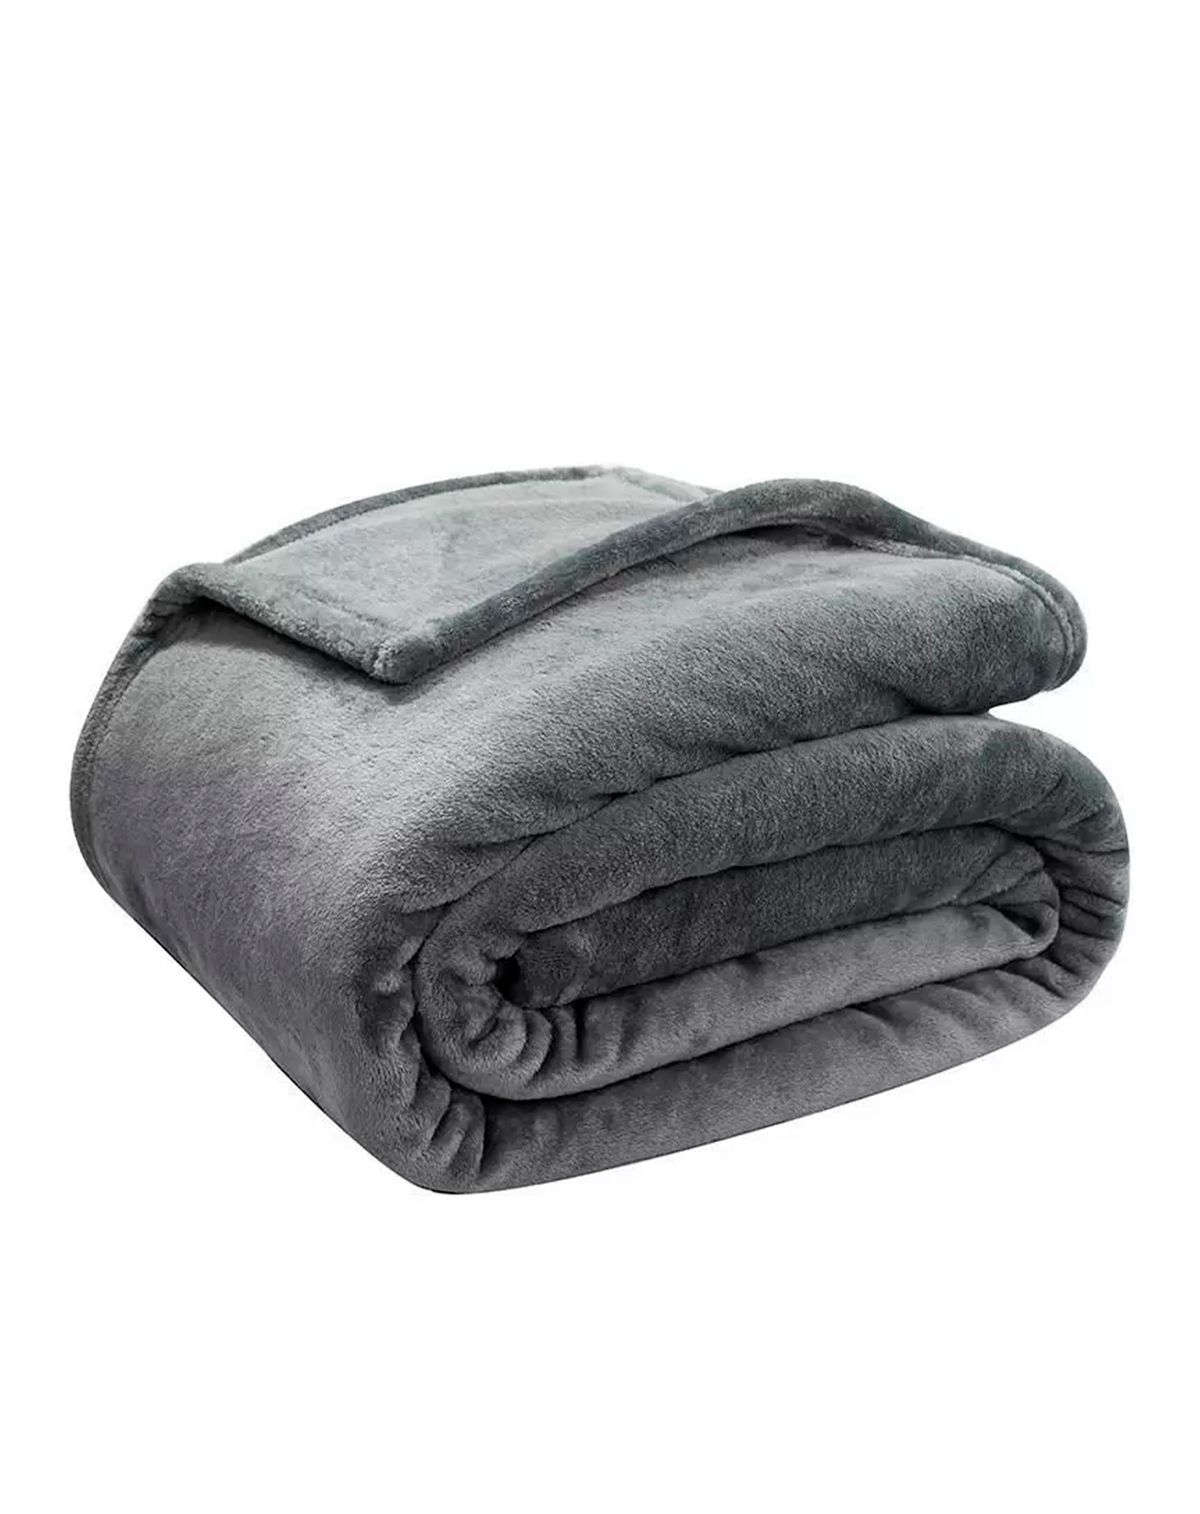 663632002-cobertor-manta-microfibra-casal-lisa-camesa-cinza-u-49c